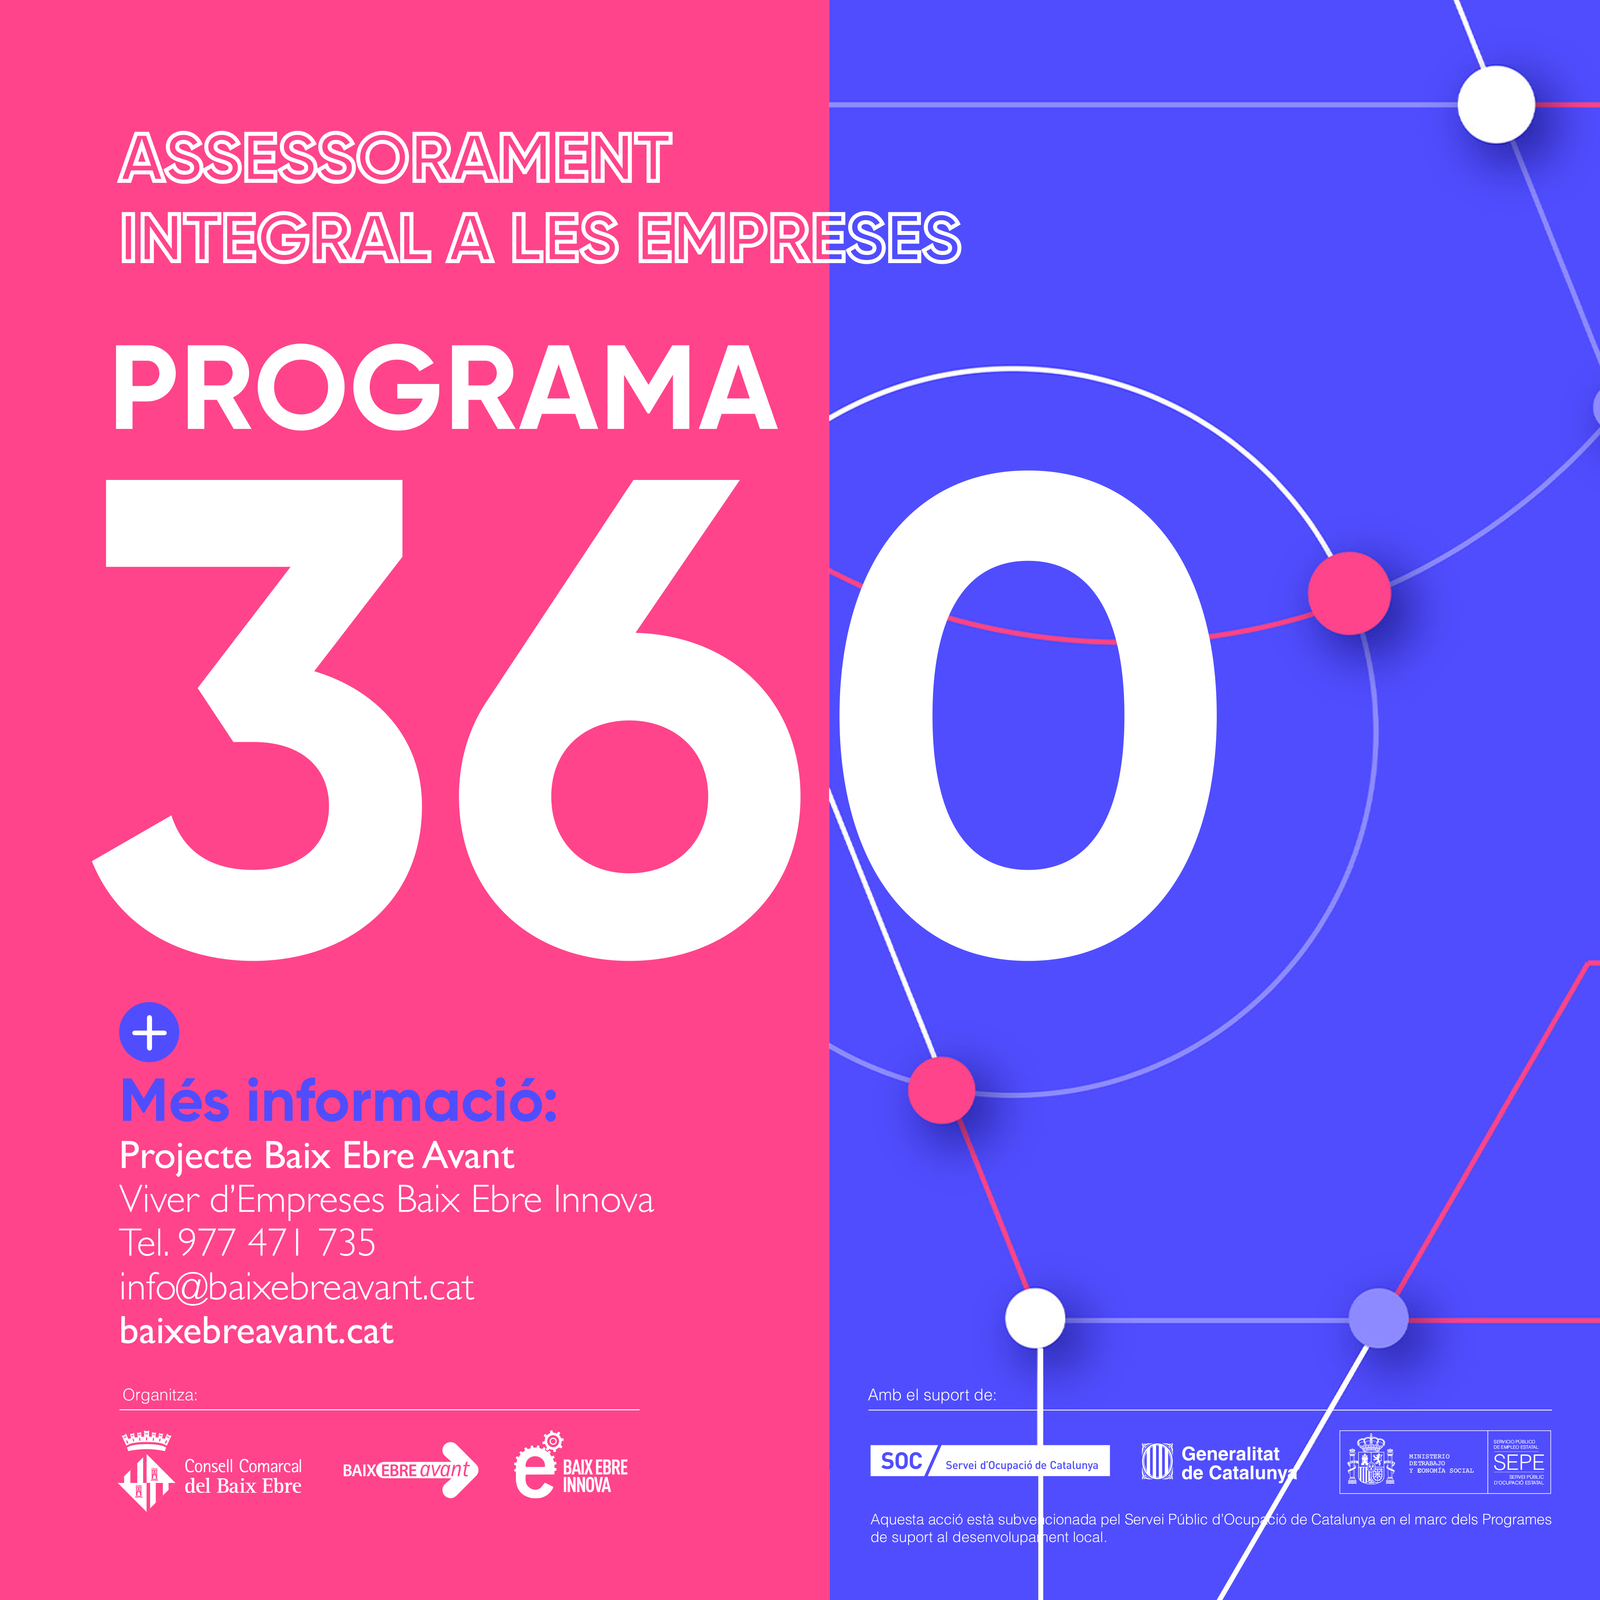 Programa 360 Assessorament Integral